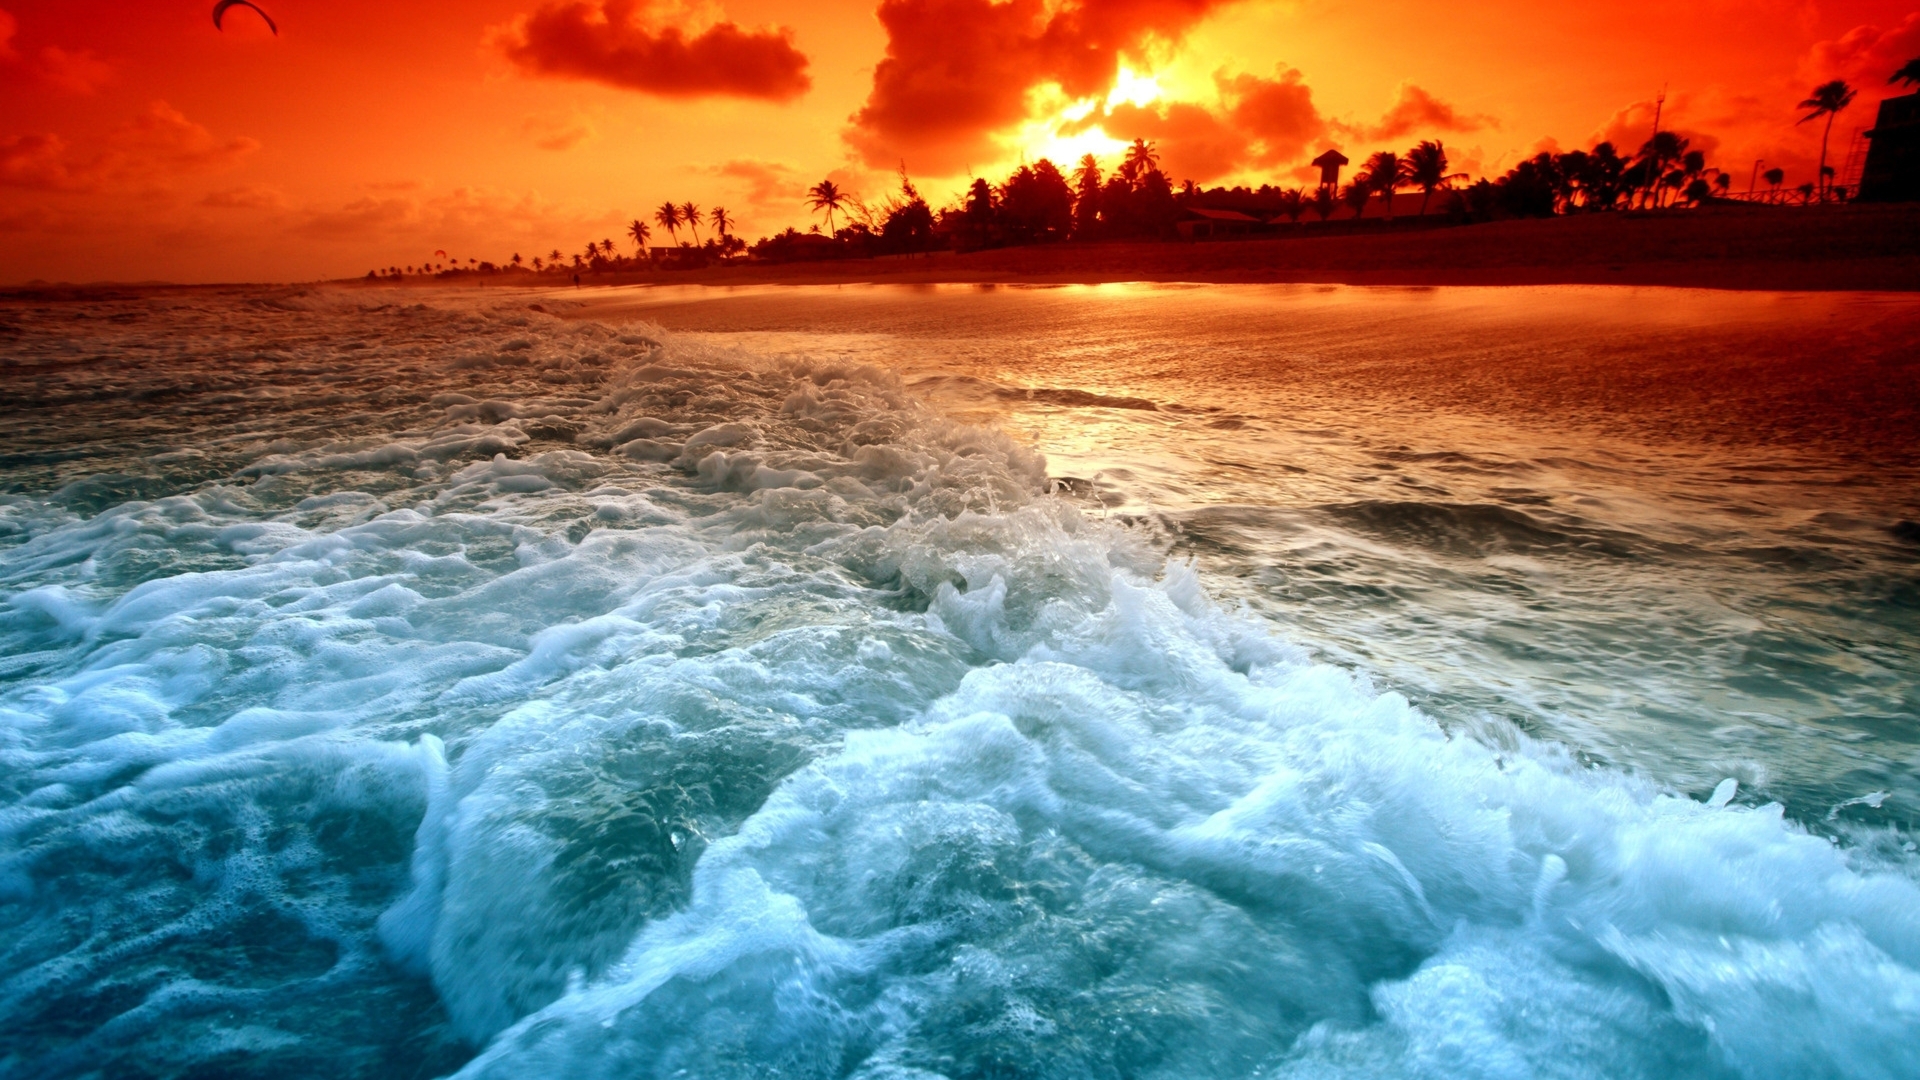 Image: Island, palm trees, water, foam, sunset